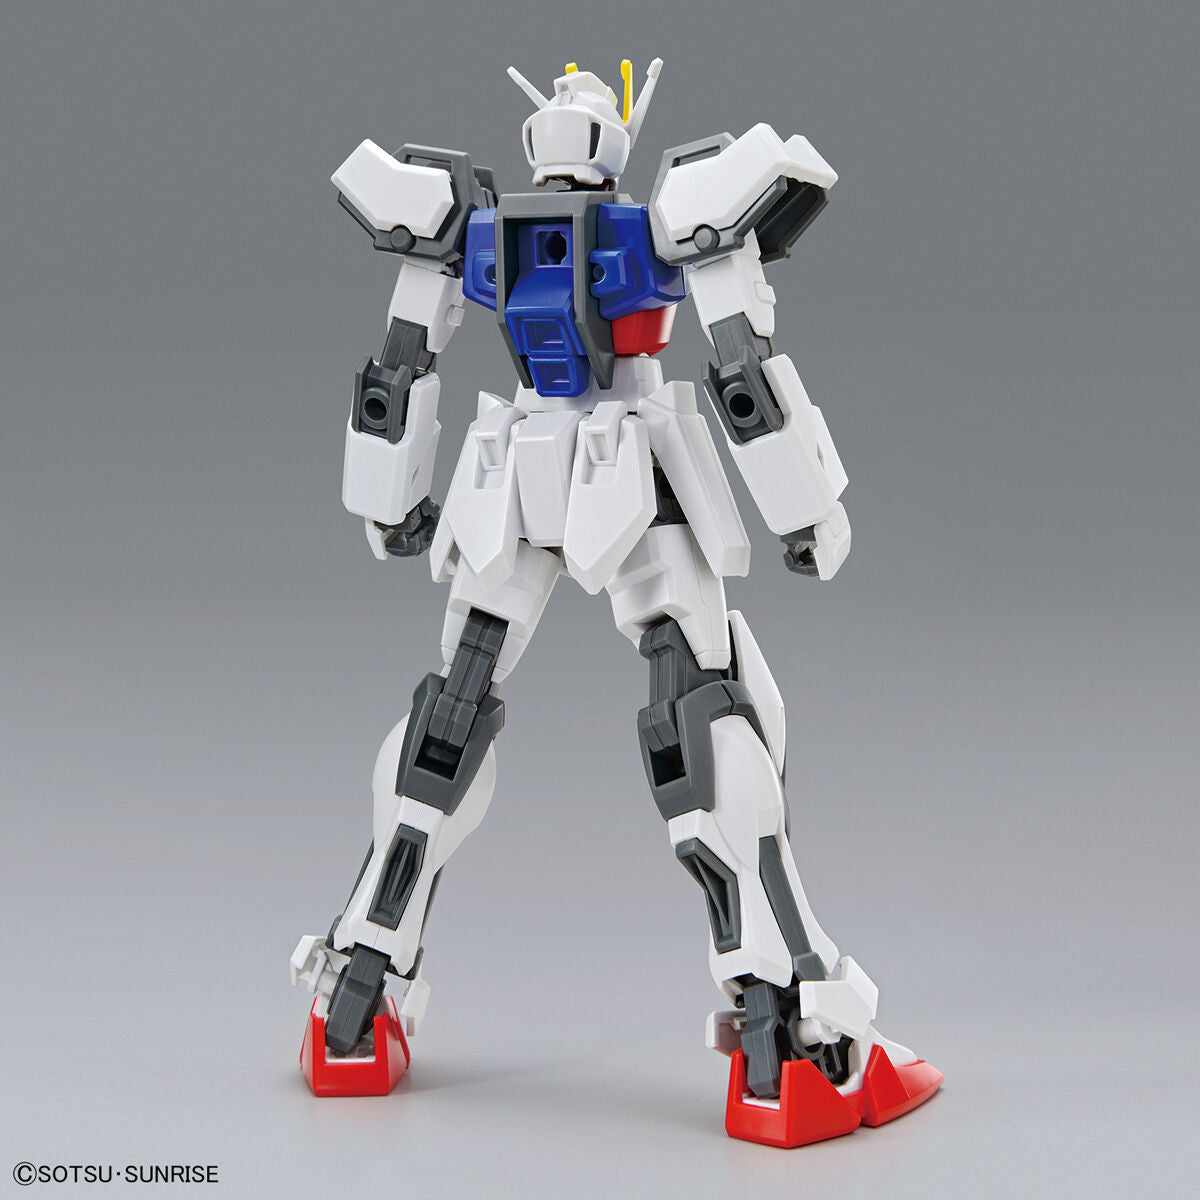 Entry Grade 1/144 Strike Gundam - Glacier Hobbies - Bandai